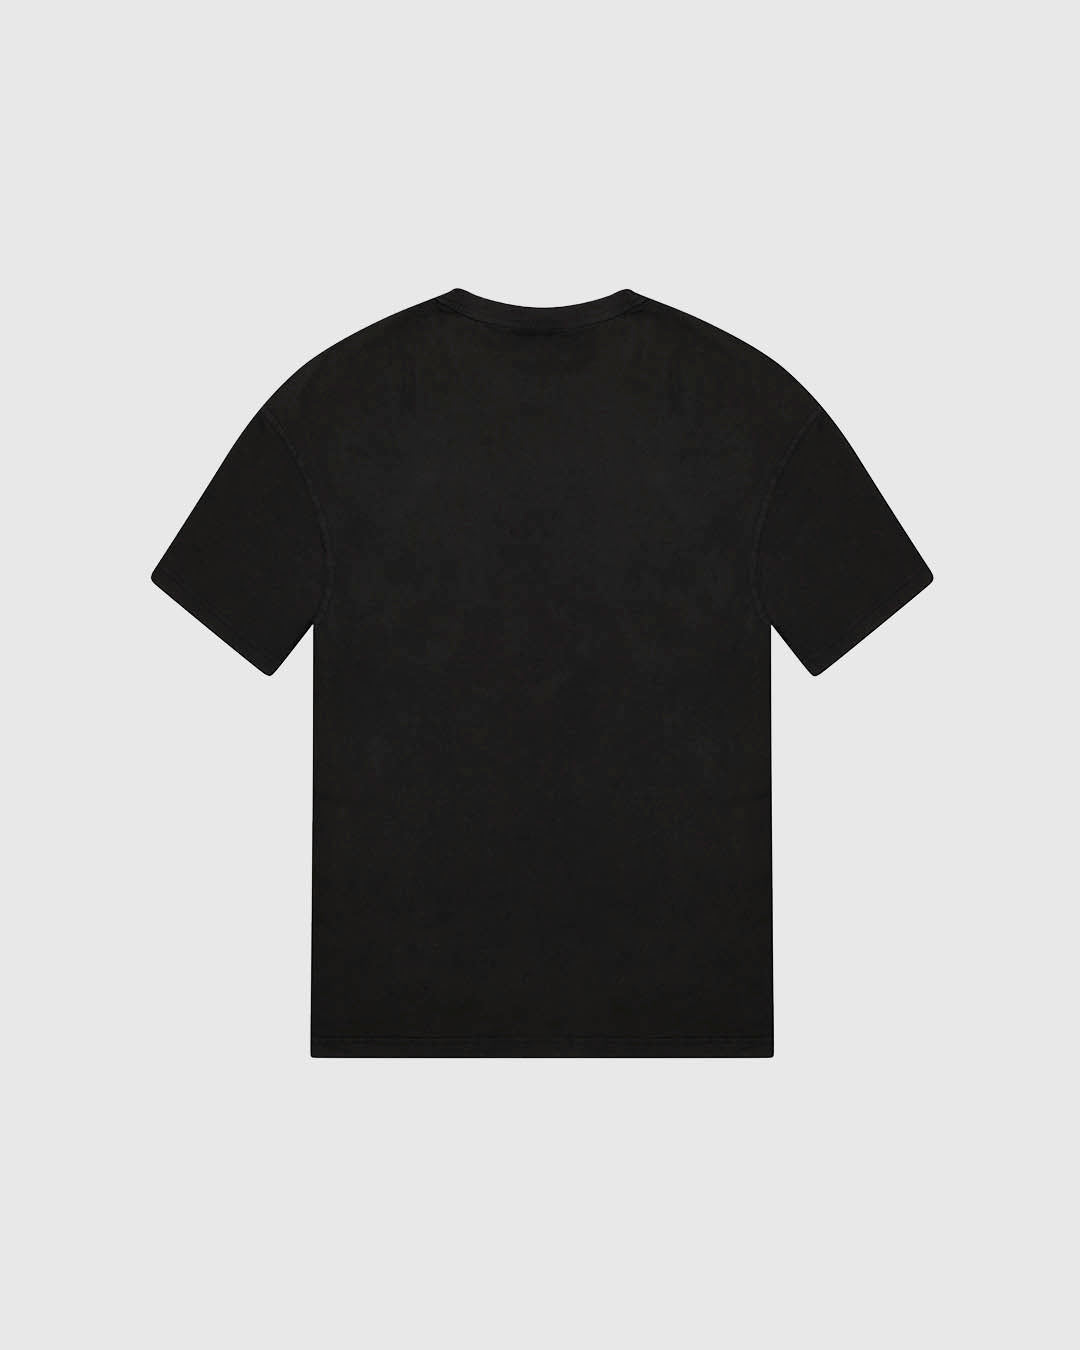 OC: 00-04 - Women's Durham T-Shirt - Black